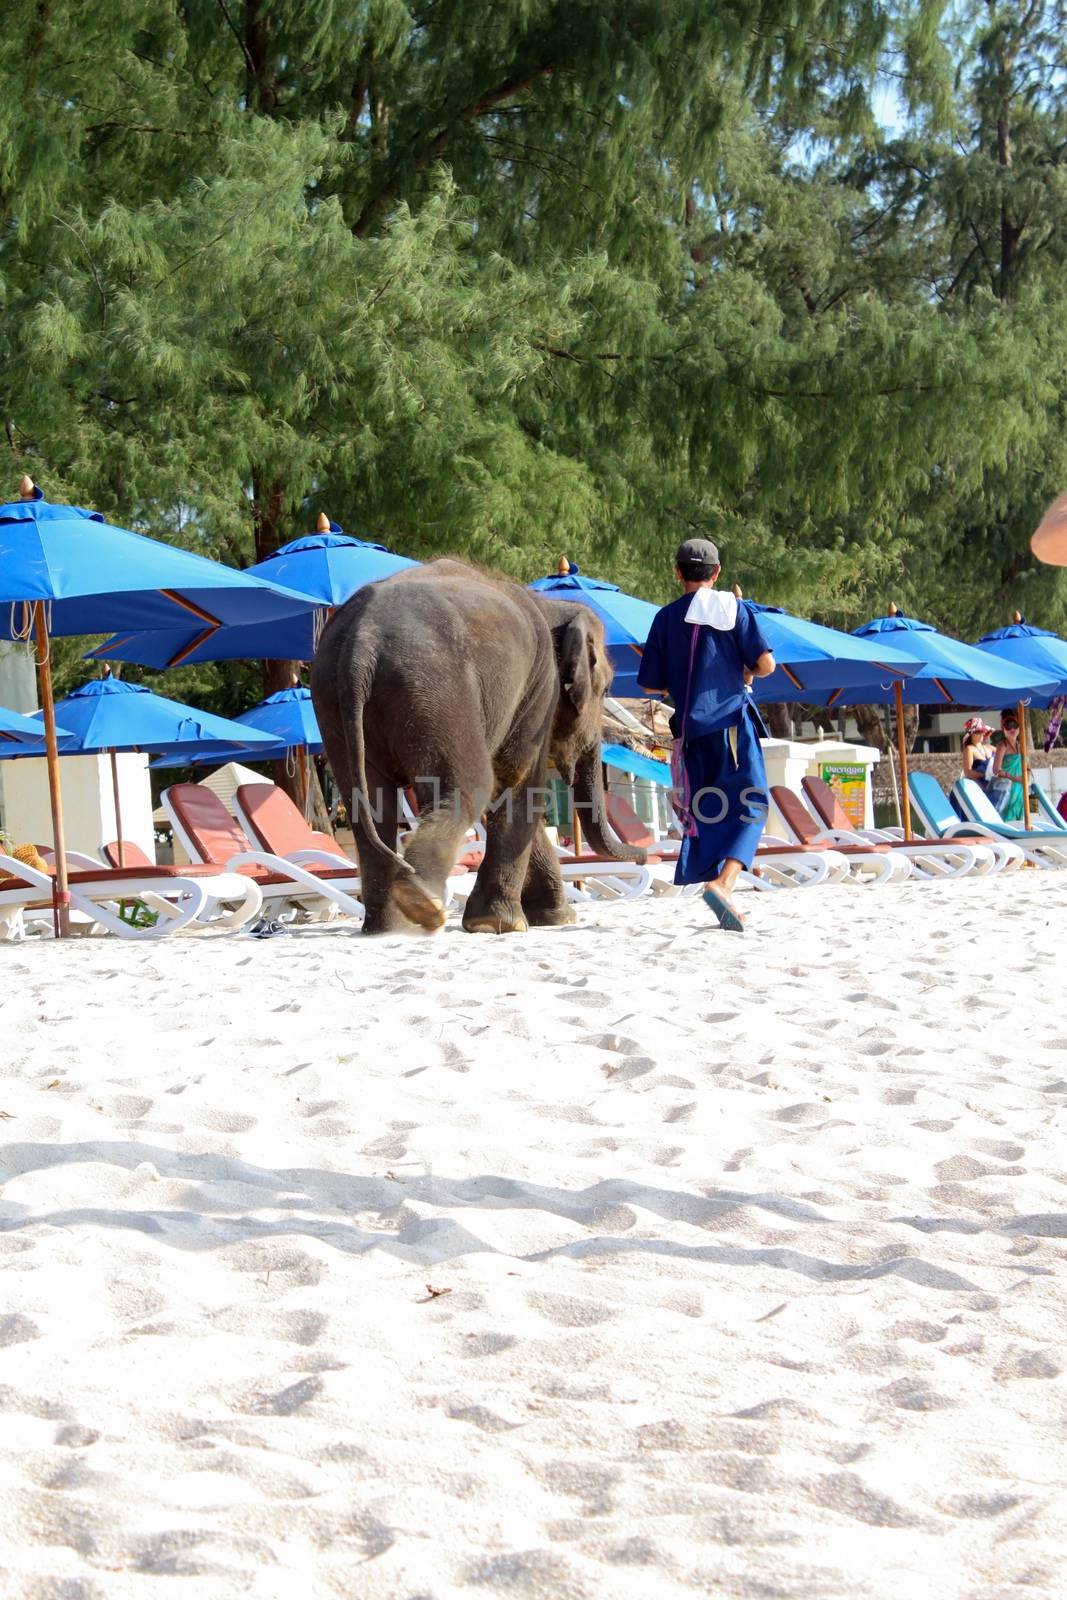 BANGTAO, PHUKET, THAILAND - NOVEMBER 06, 2013: baby elephant wal by evolutionnow